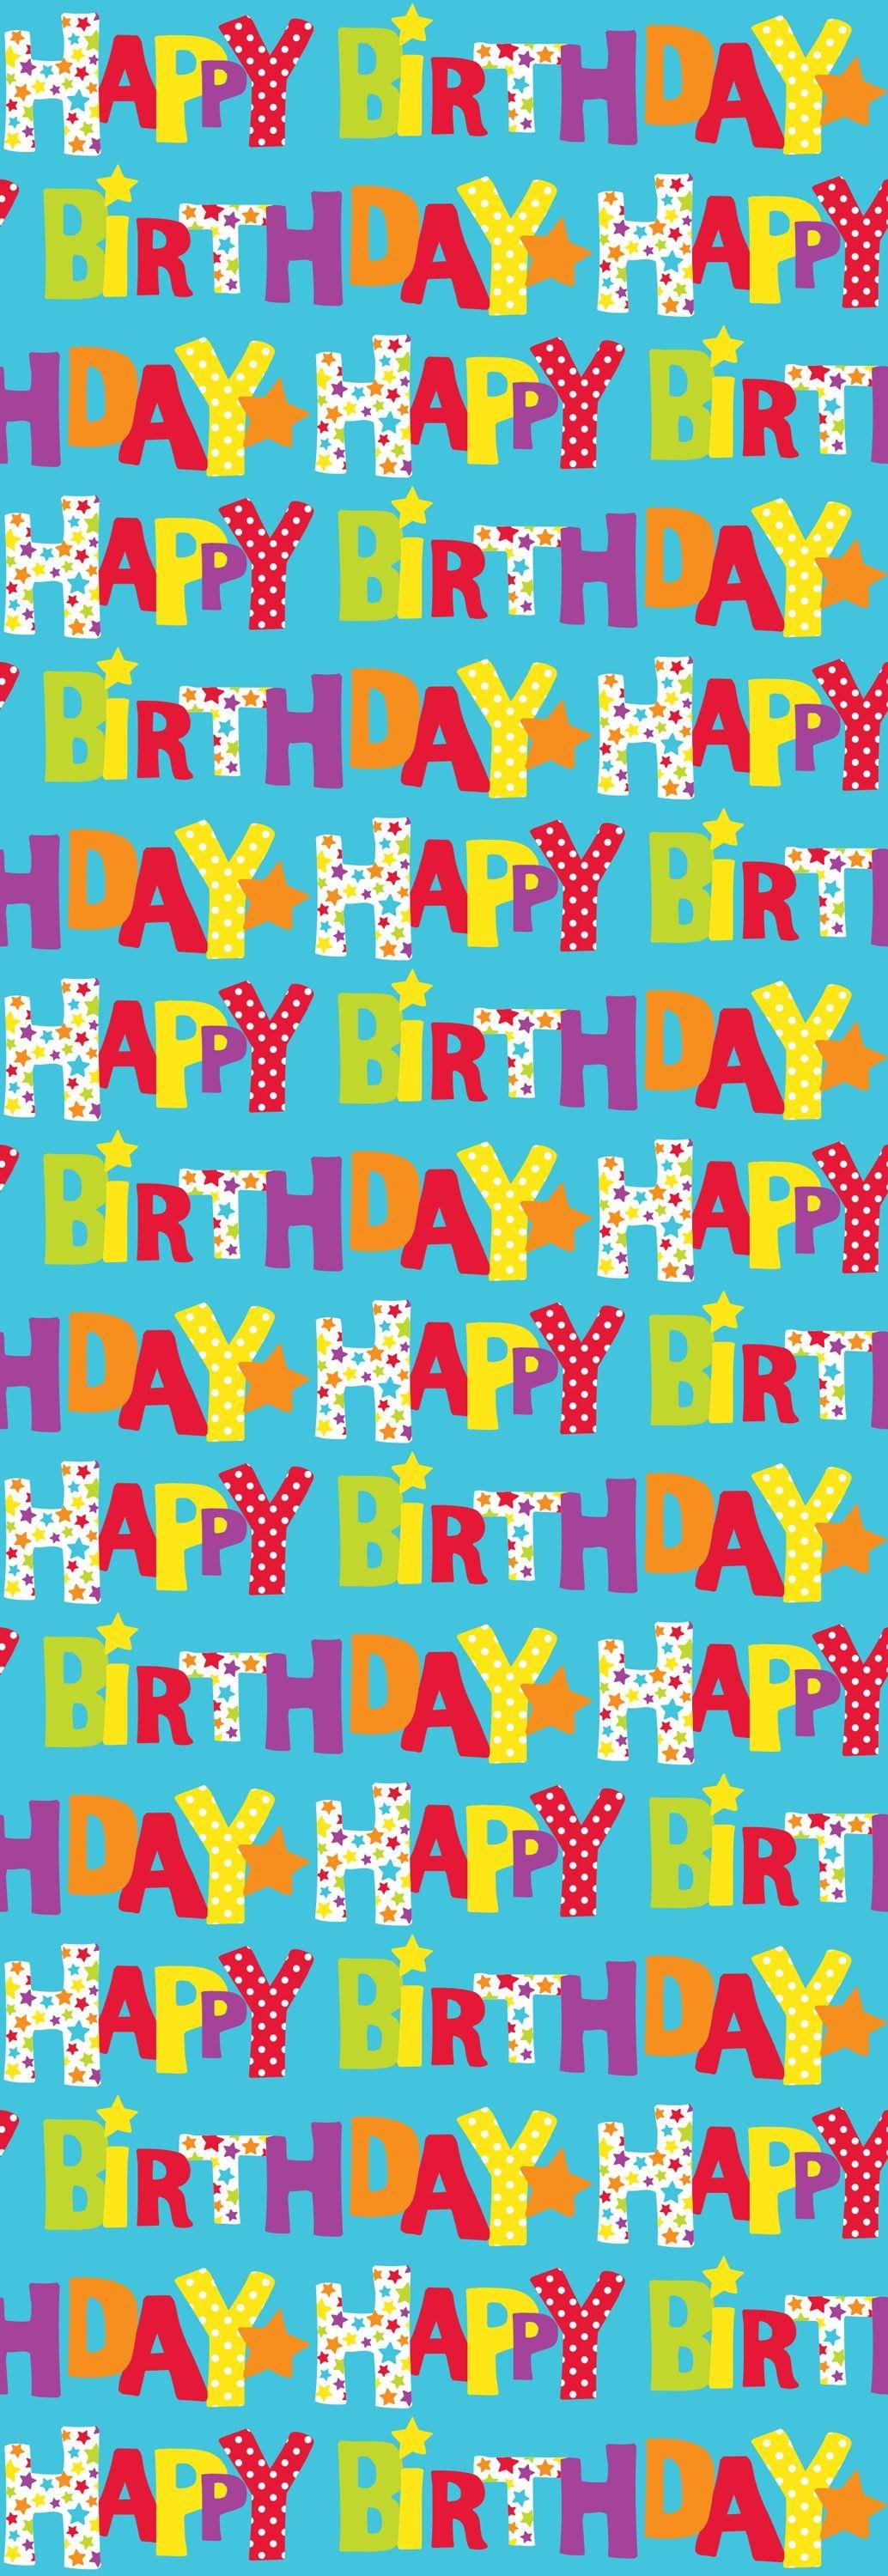 Happy Birthday 4 Metre Gift Wrap. Review